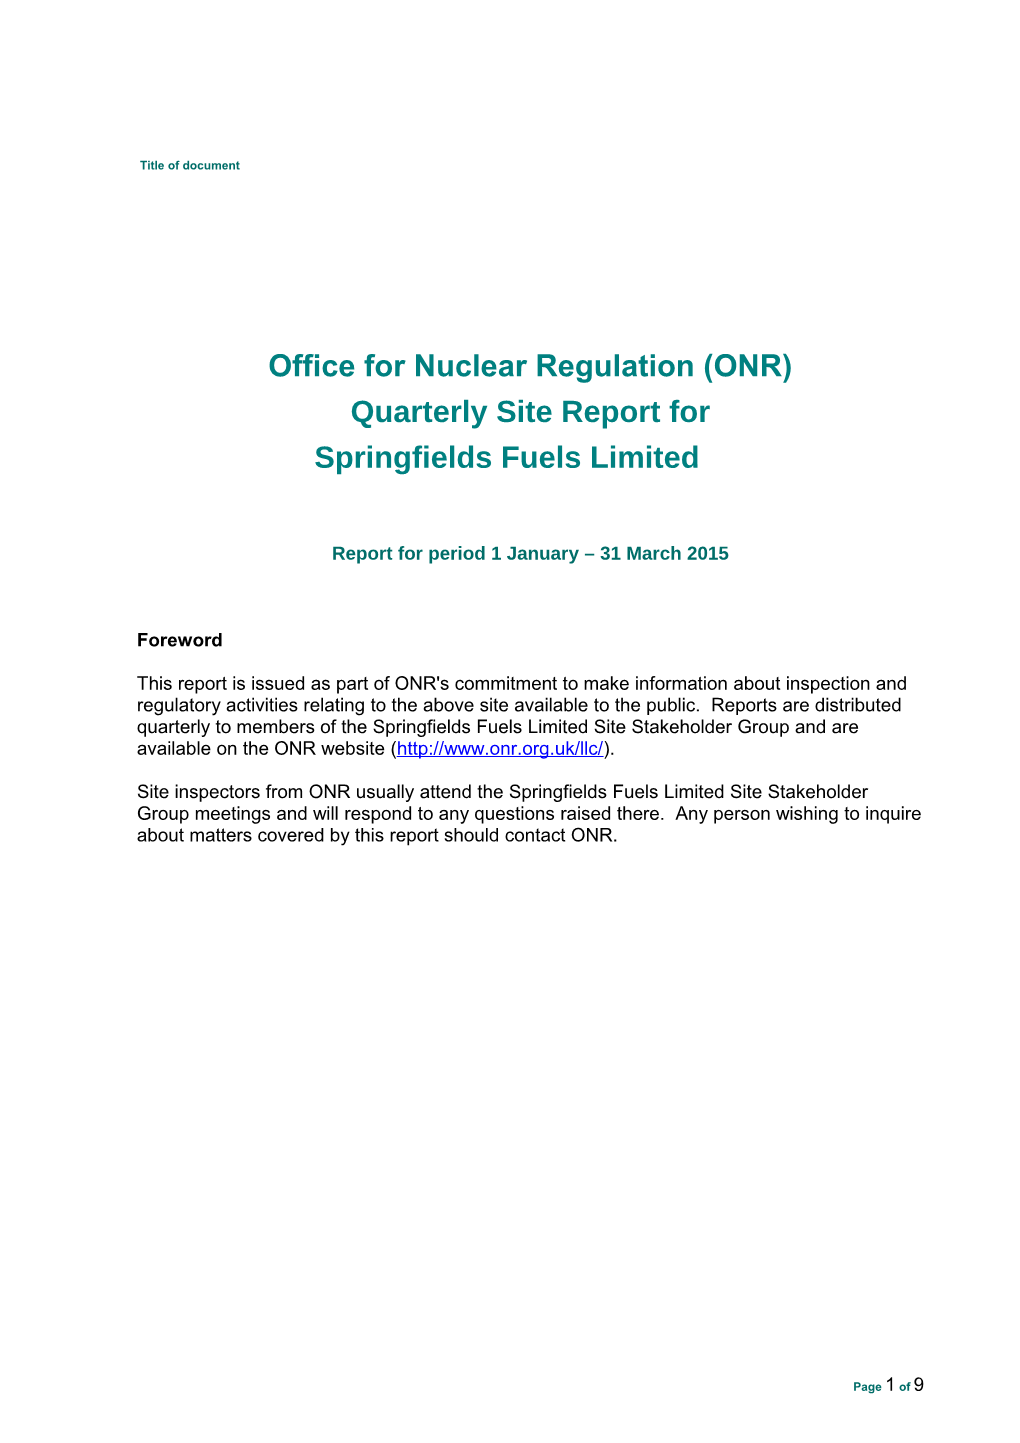 Quarterly Site Report for Springfields Fuels Limited 2015 Quarter 1